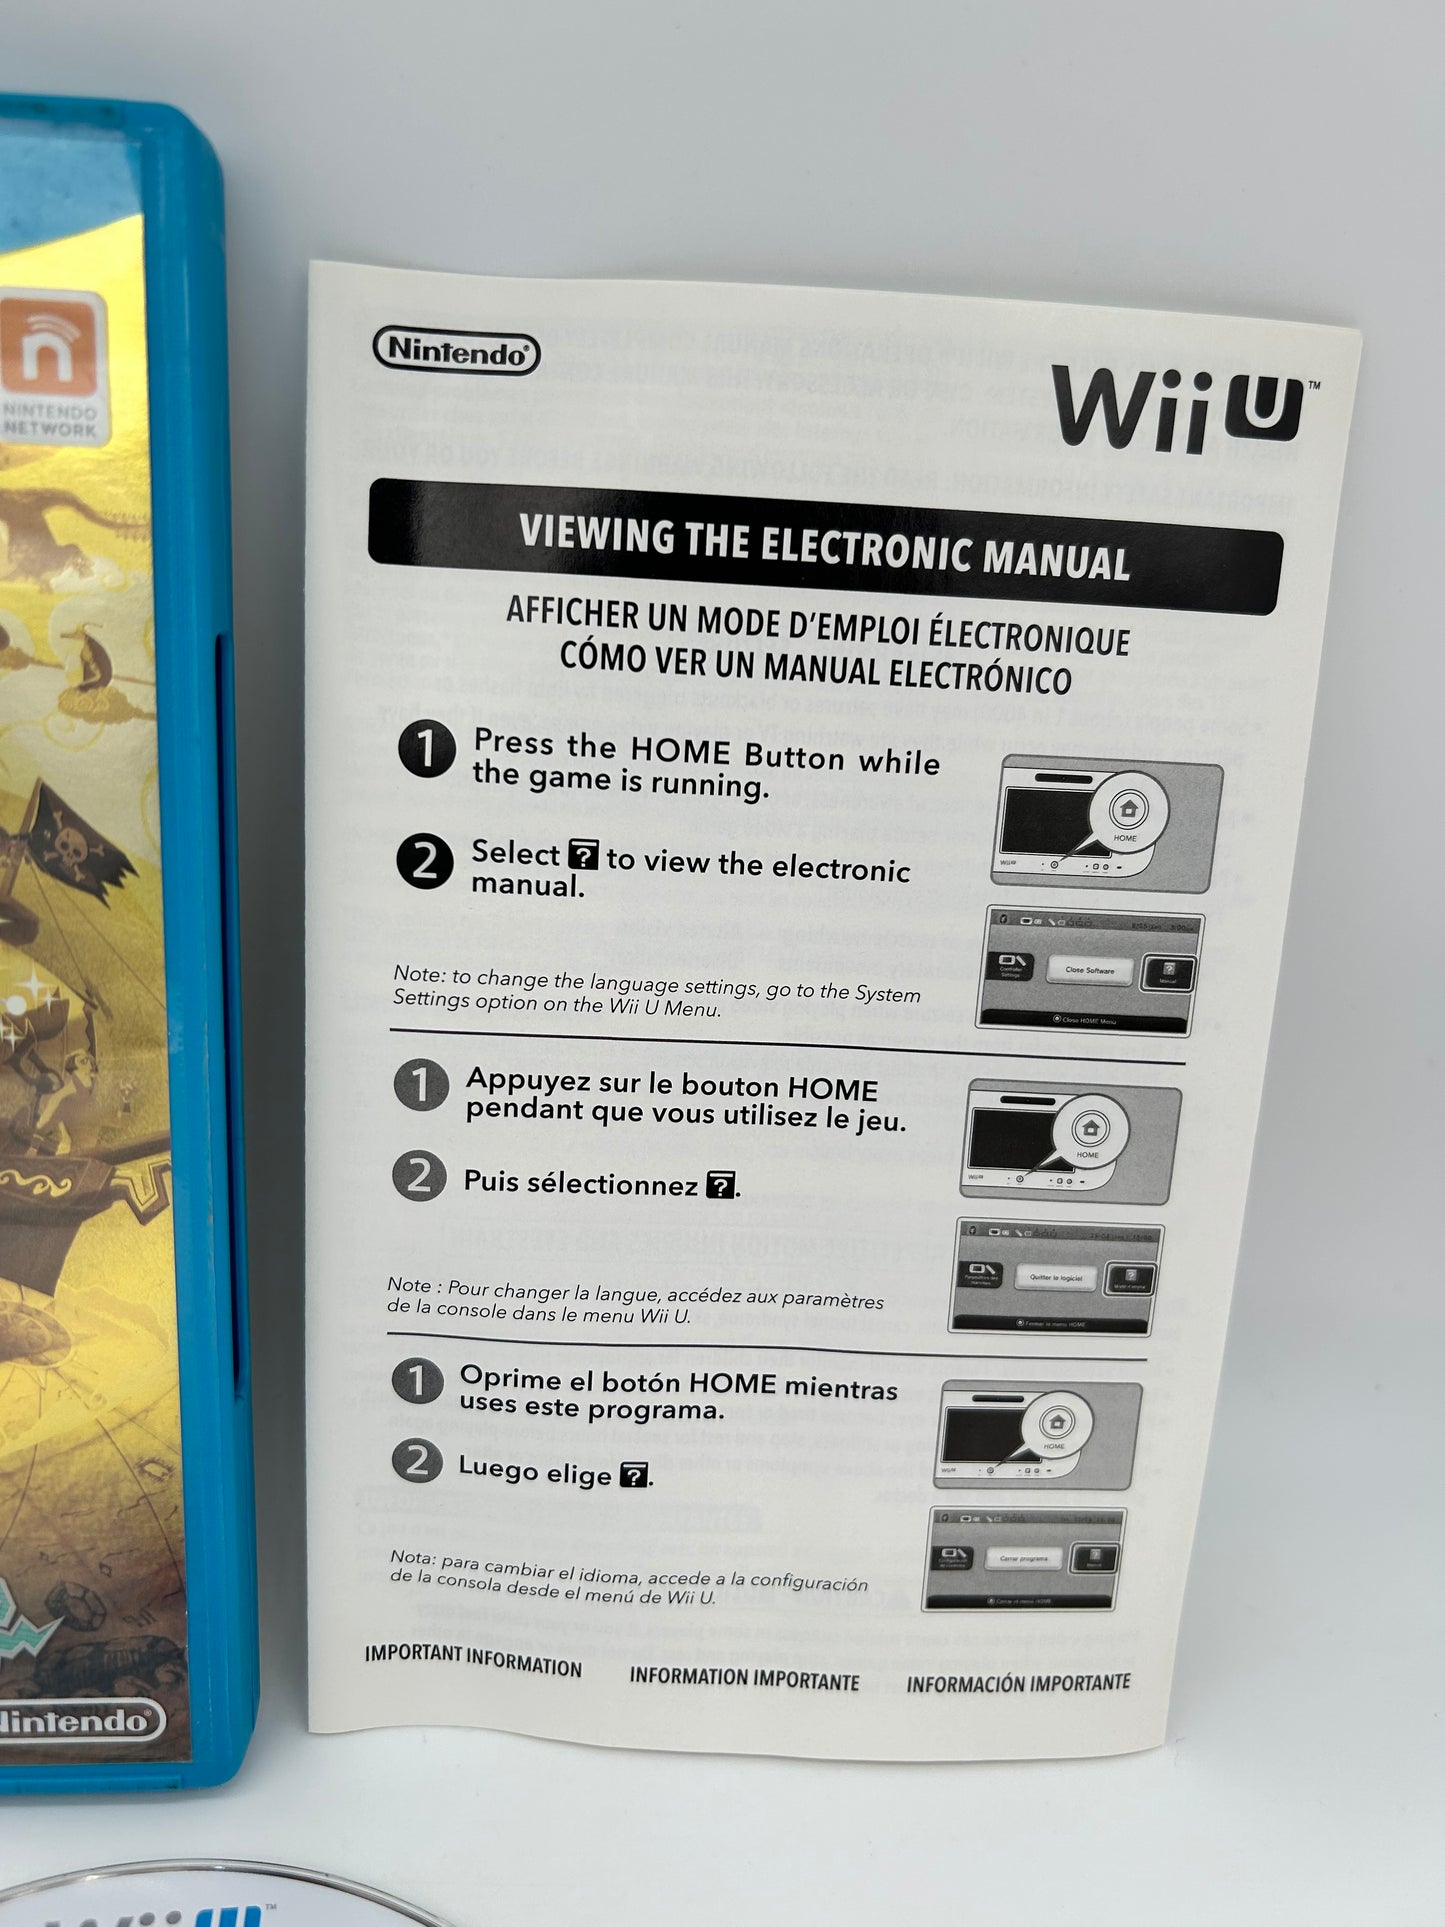 NiNTENDO Wii U | THE LEGEND OF ZELDA THE WiND WAKER HD